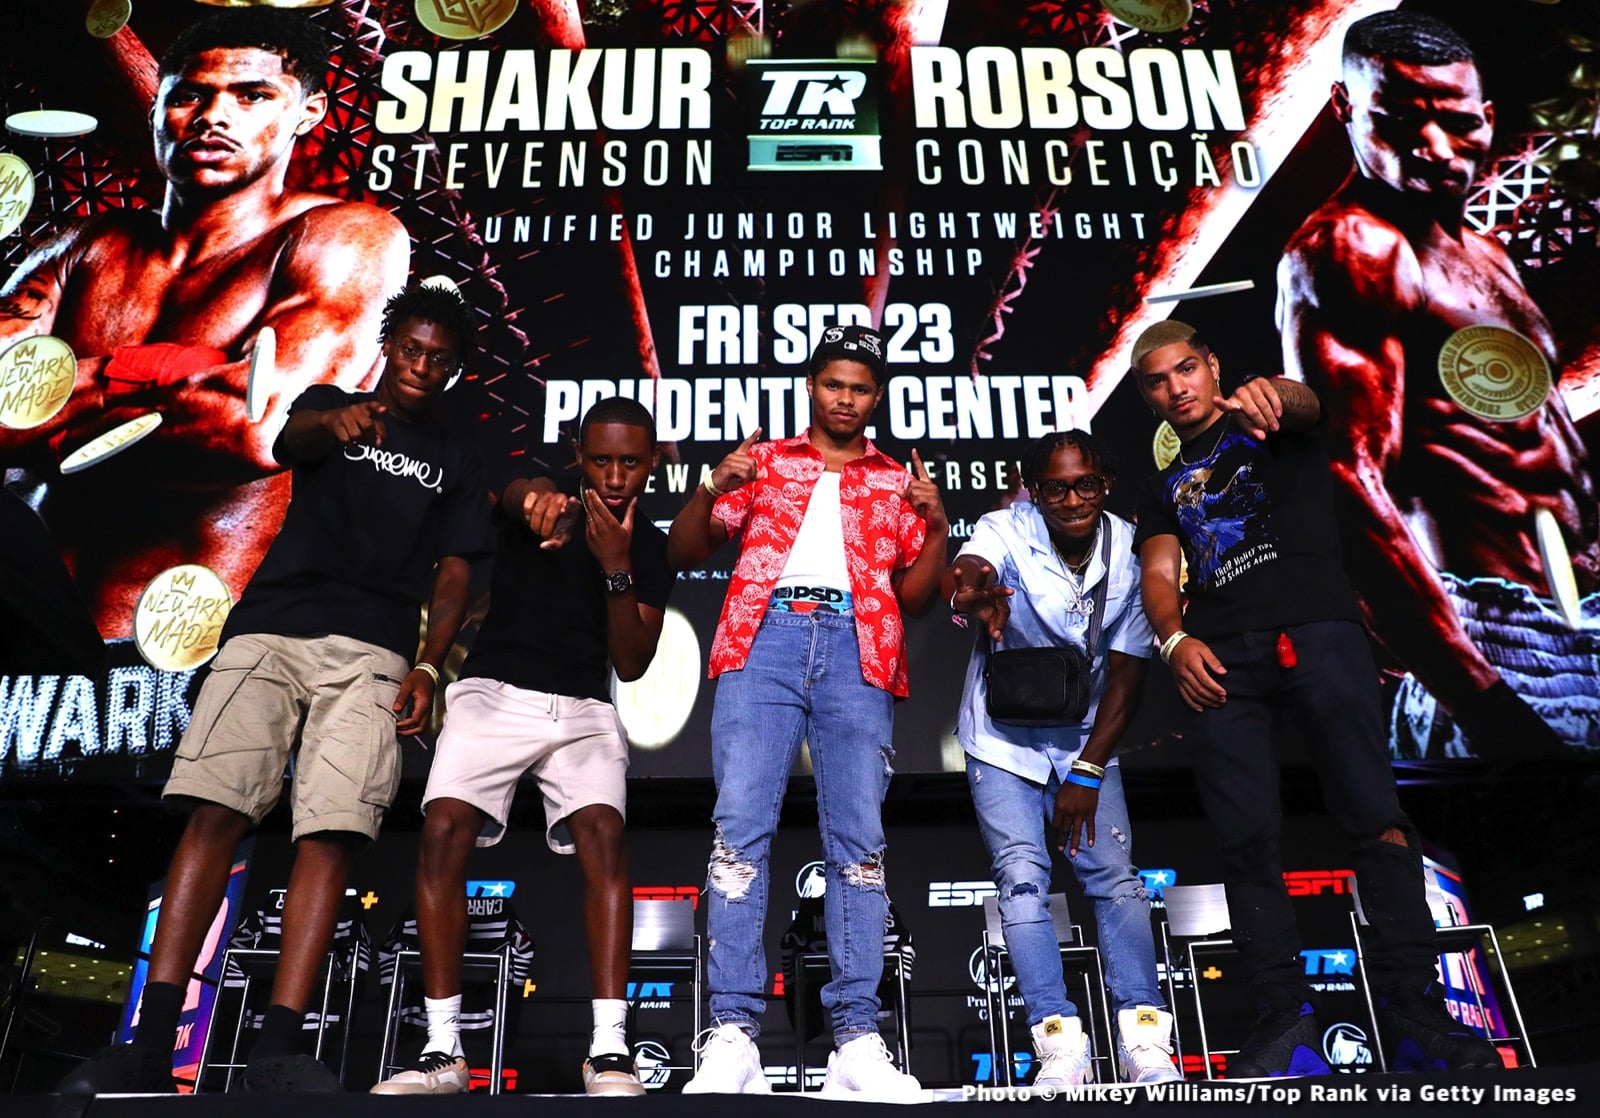 Robson Conceição, Shakur Stevenson boxing image / photo